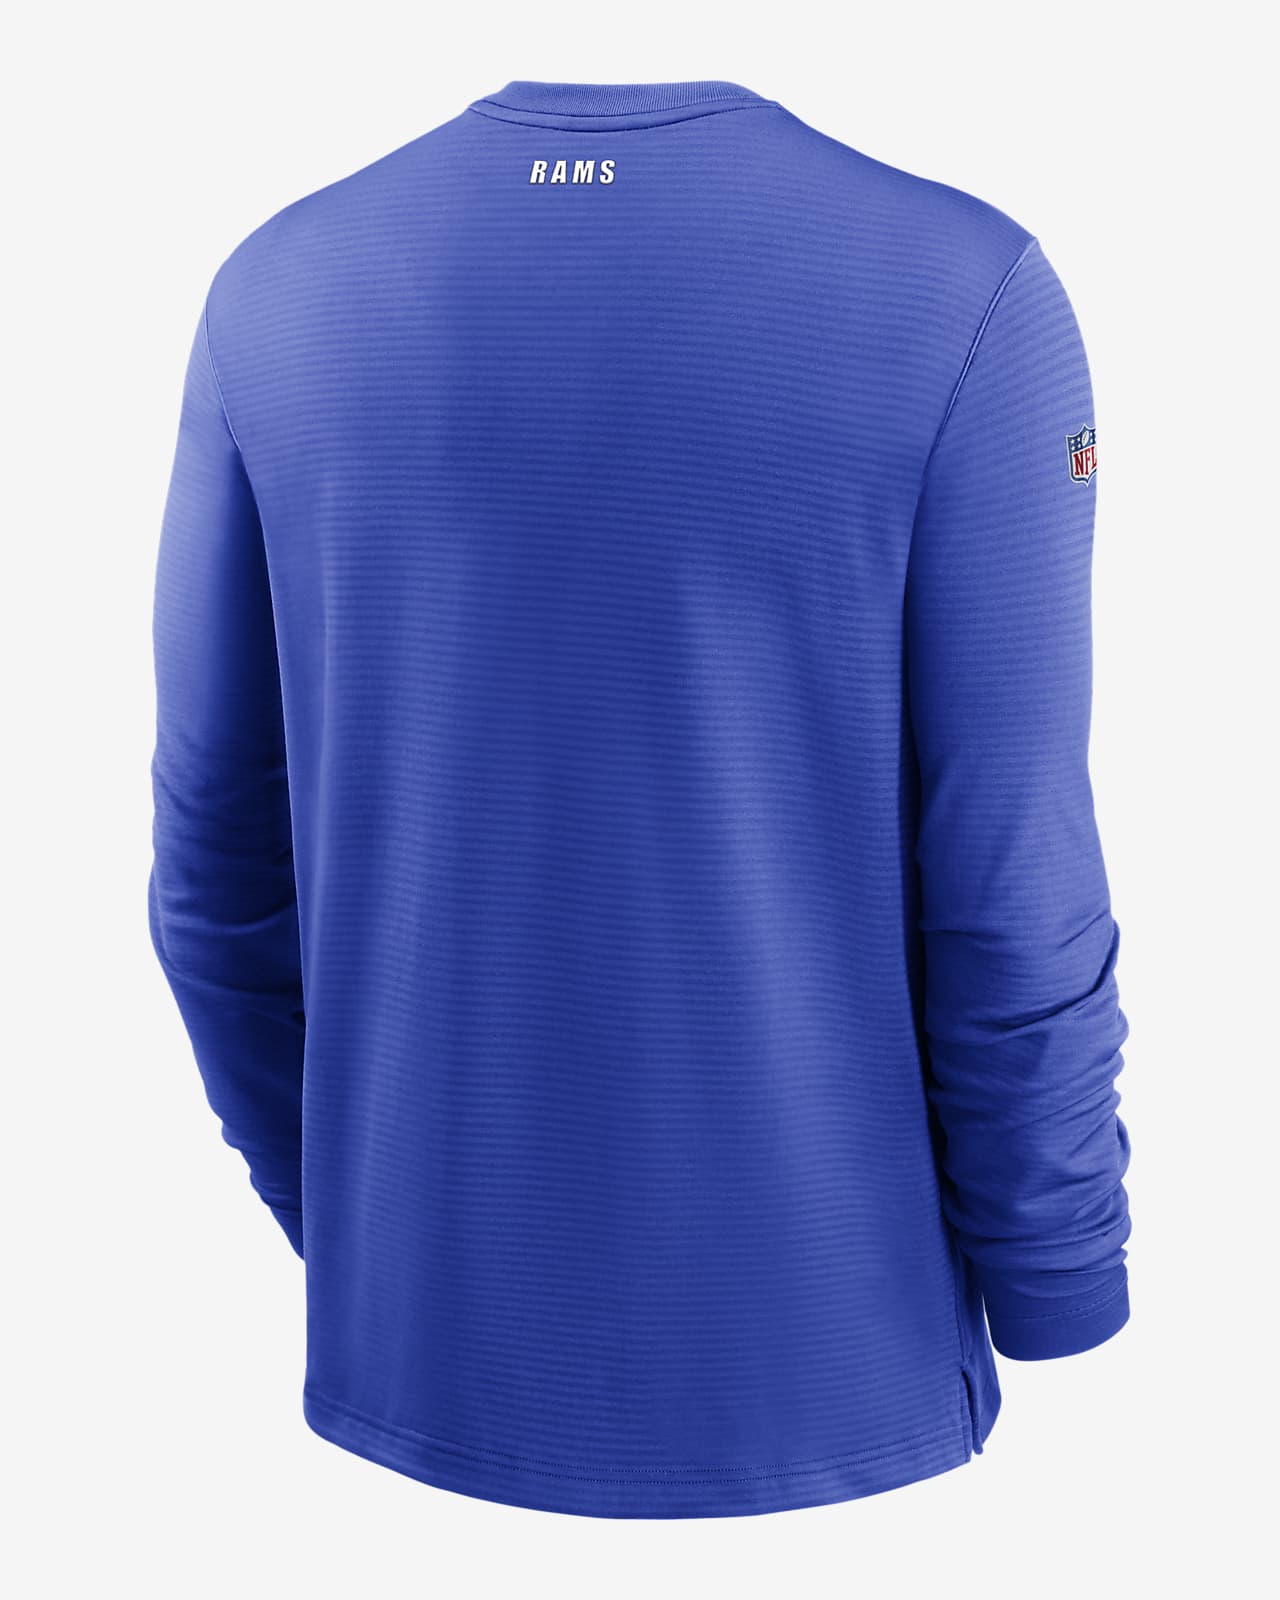 Camiseta de manga larga para hombre Nike Dri-FIT (NFL Rams). Nike.com